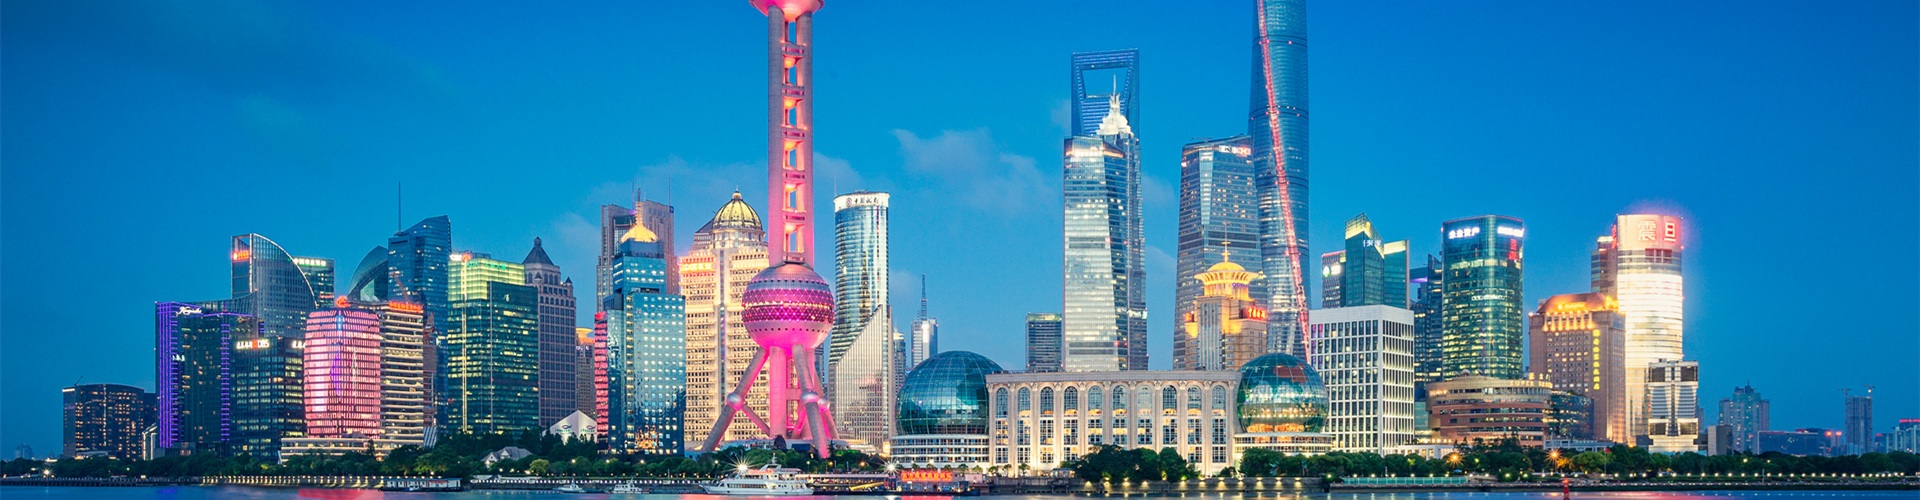 Shanghai World Financial Center - a Financial Compass of the World